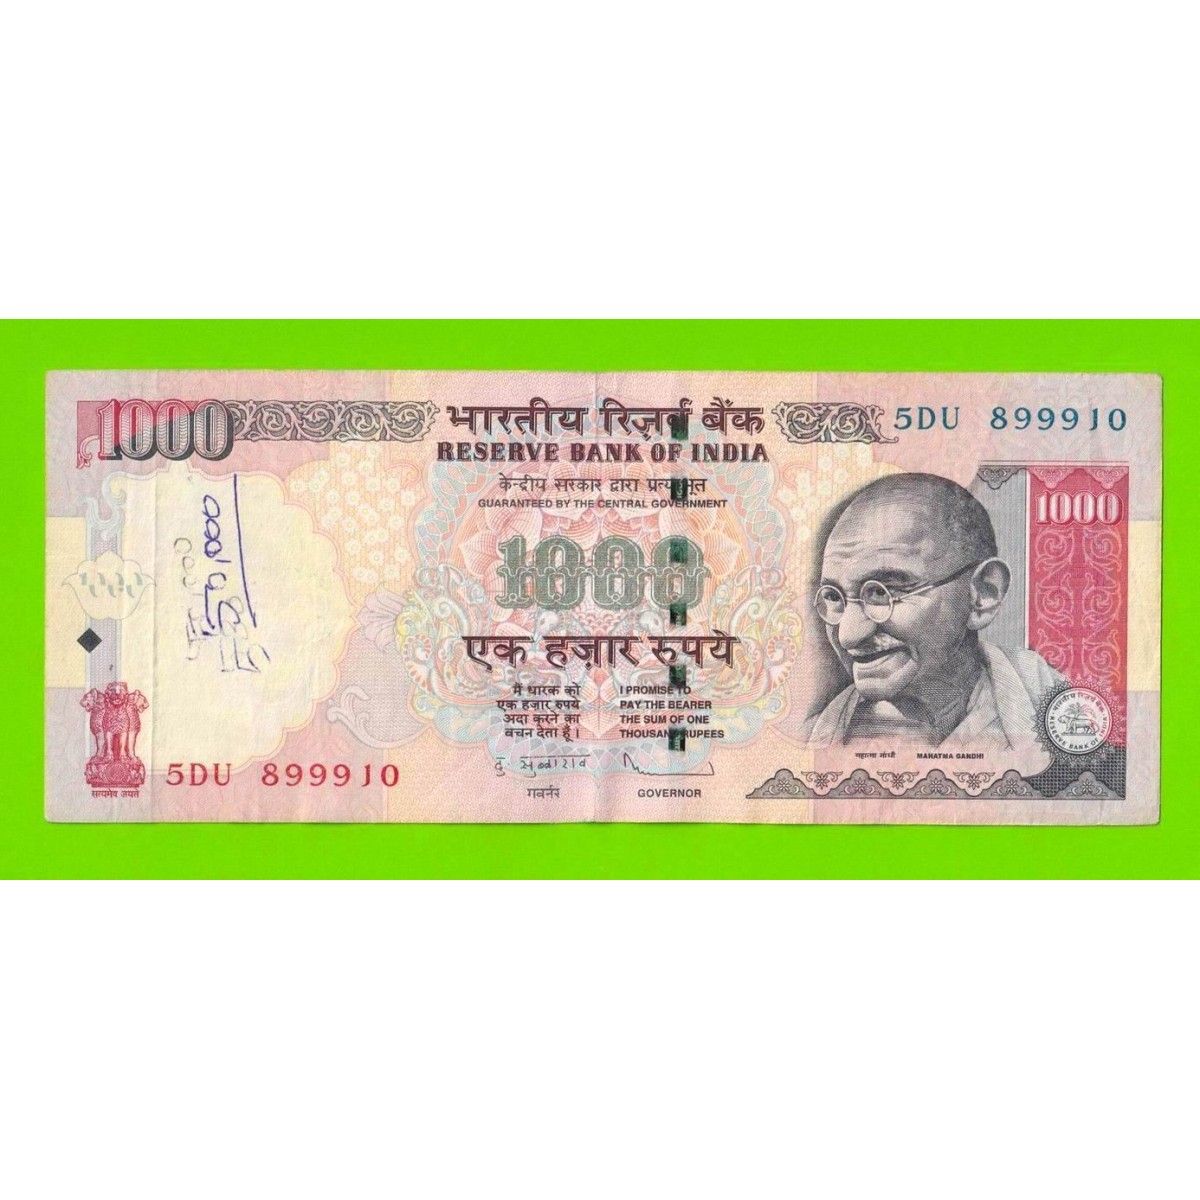 Валюта рупий к рублю. 1000 Индийских рупий. Индийская валюта 1000. Индонезийская валюта в 1000. Банкноты 1000 рупий.